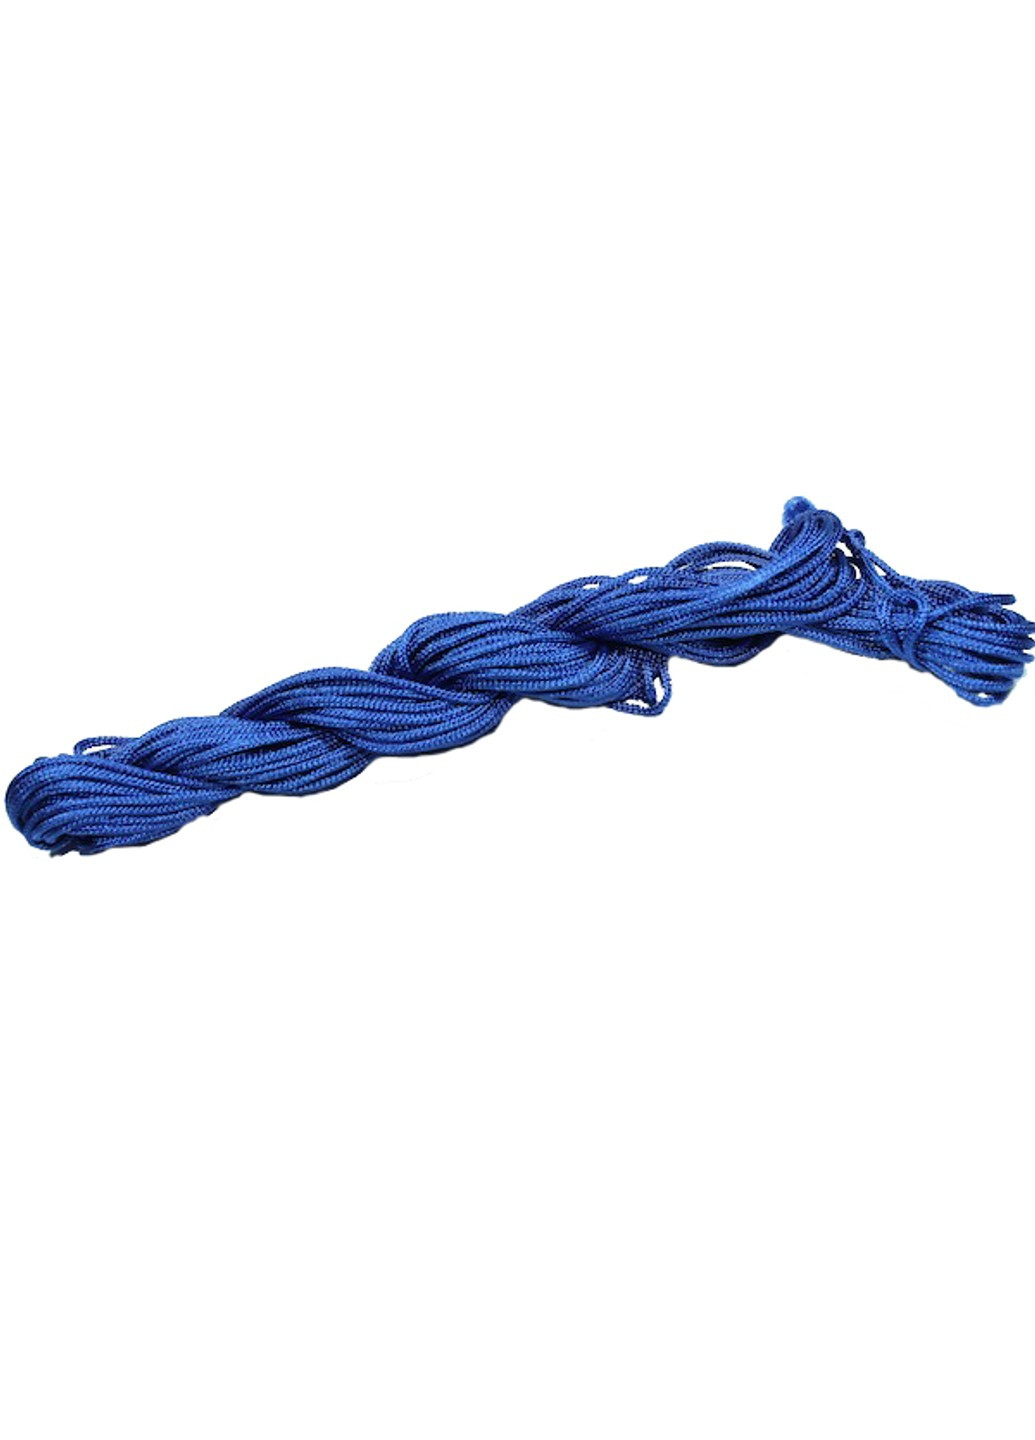 Мотузка біжутерна синтетична для Шамбали 11-13м/1.5мм FROM FACTORY (260742660)